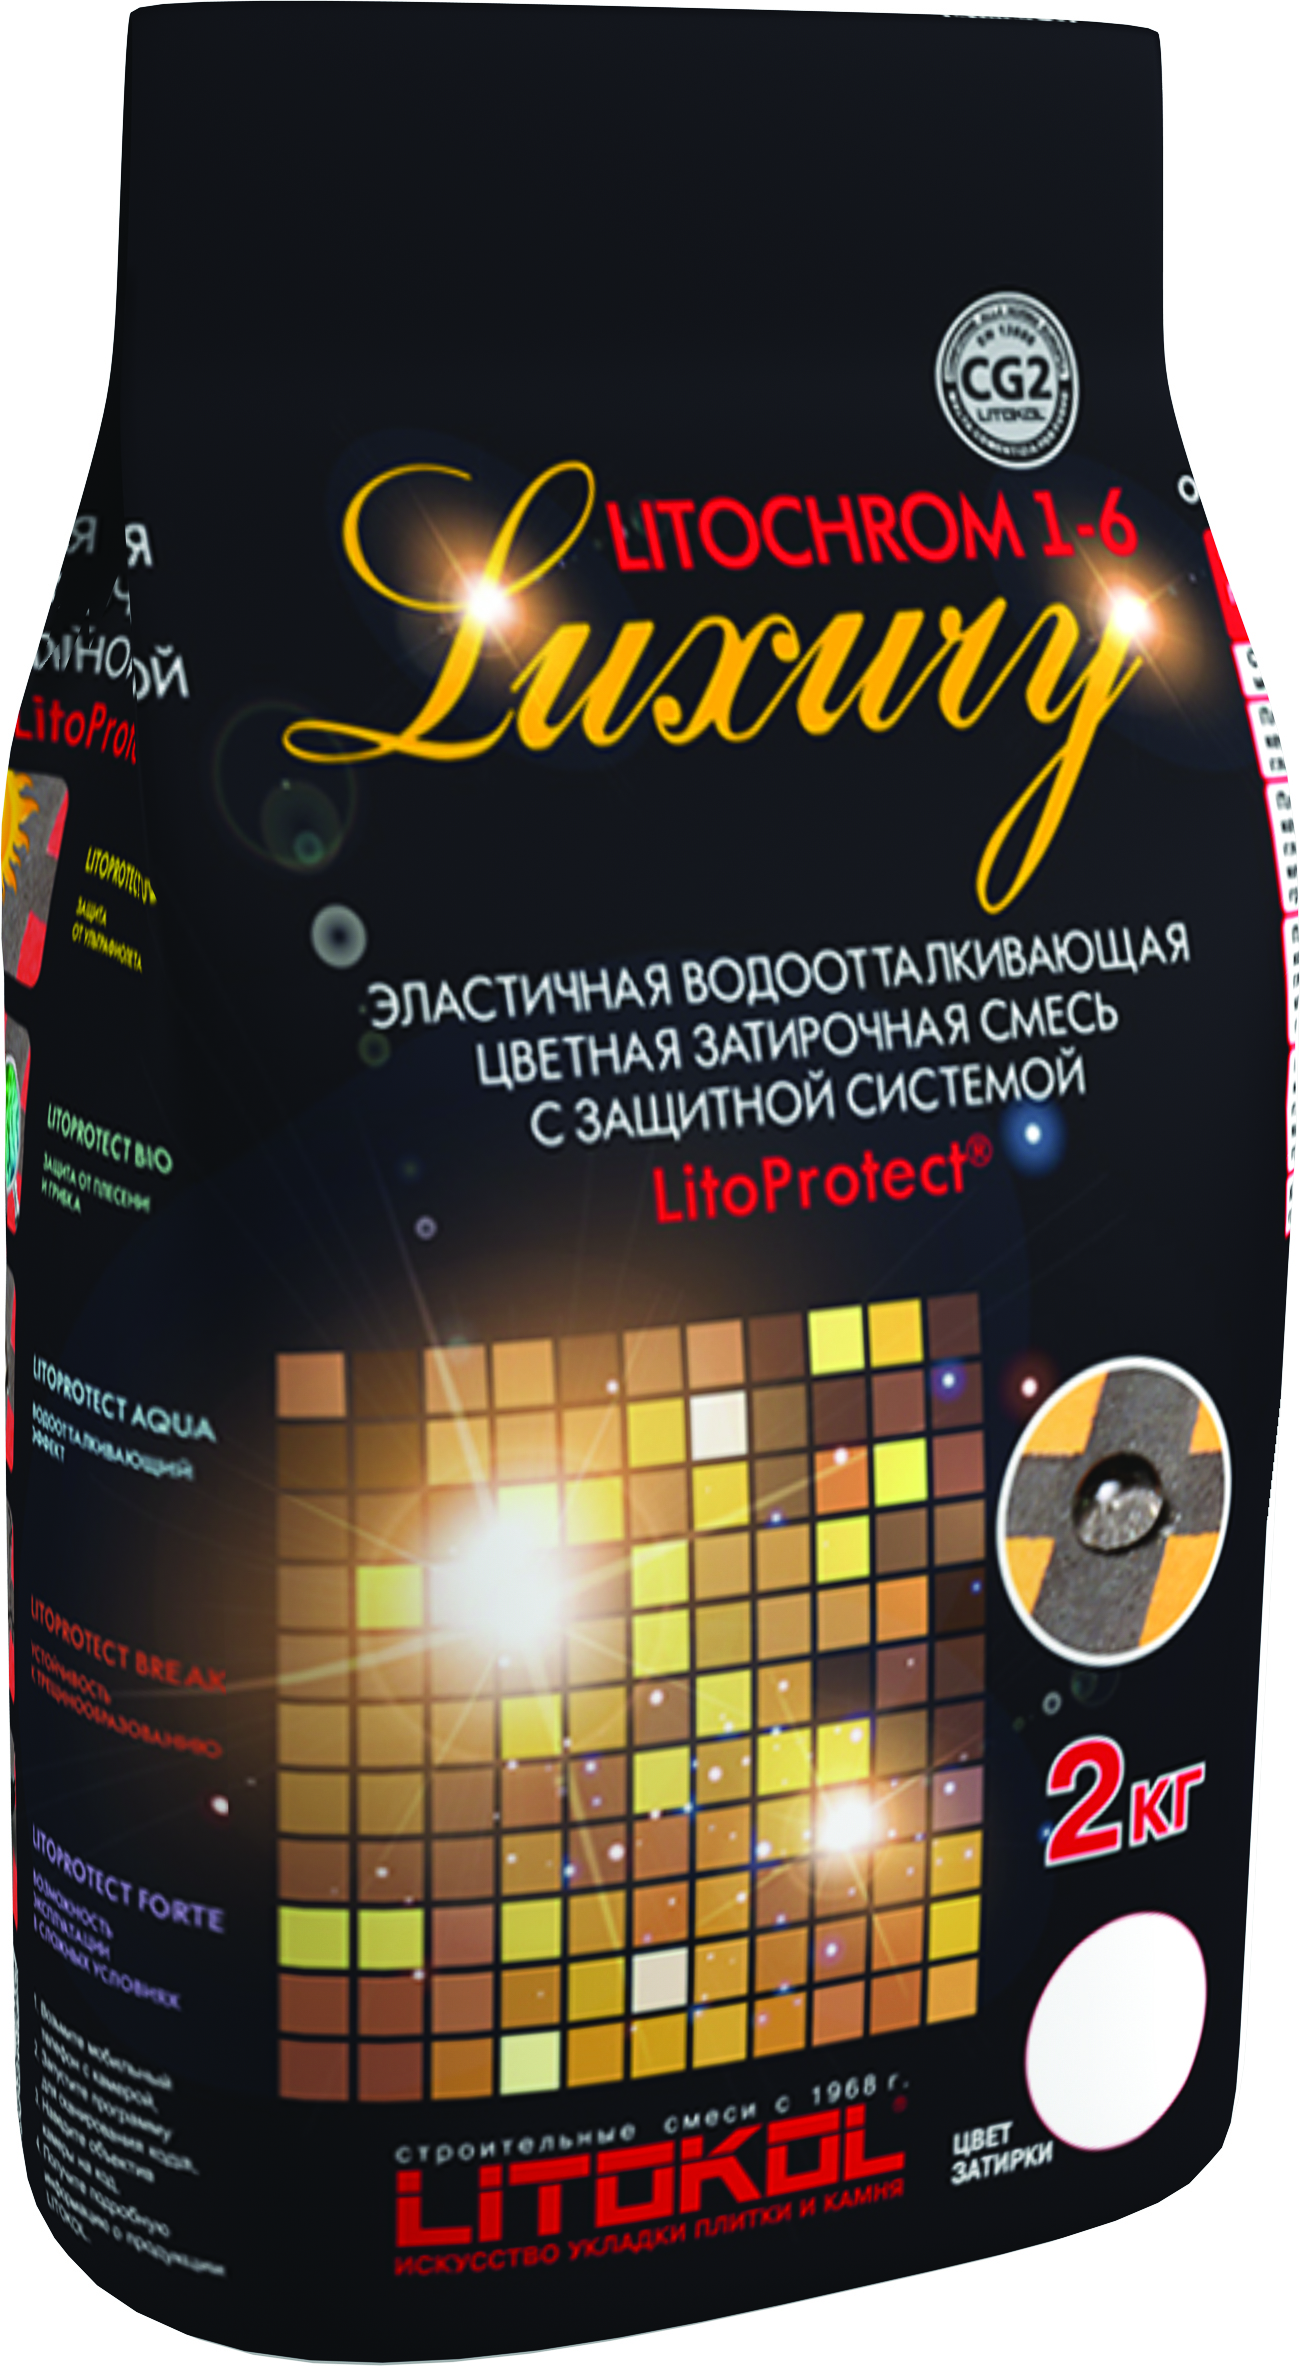 Купить Litokol Litochrom 1-6 Luxury C.200, 2 кг